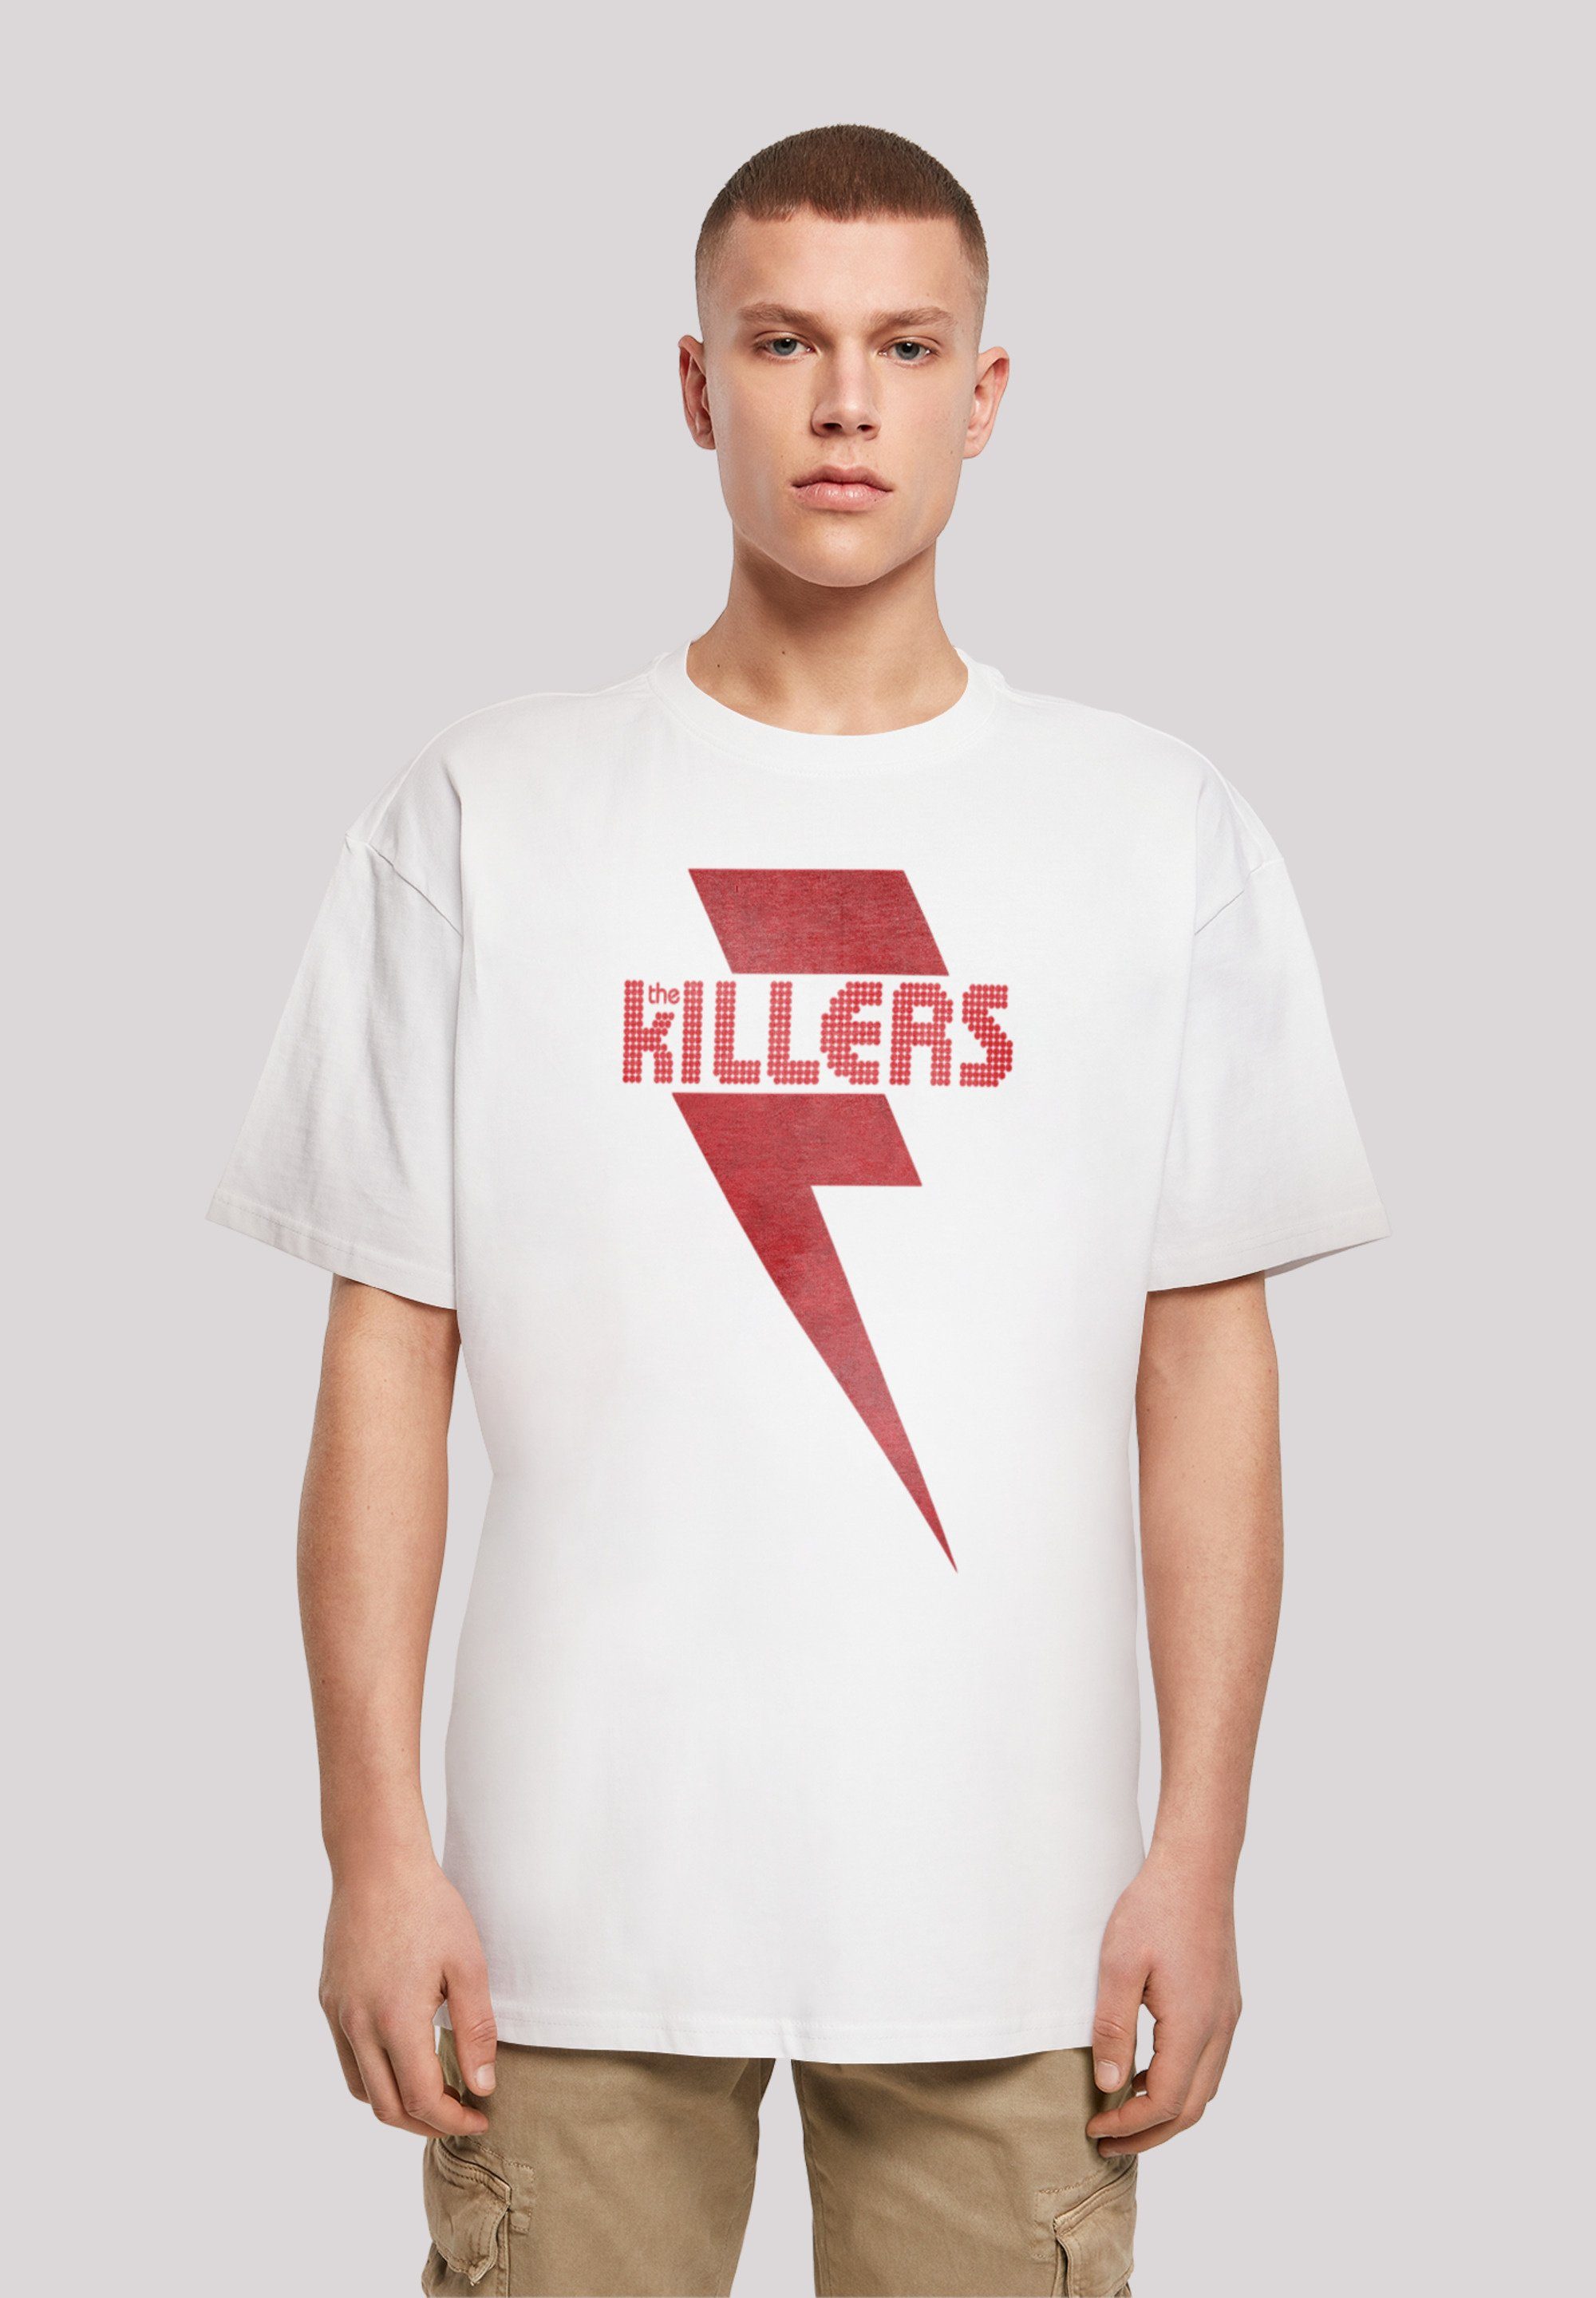 F4NT4STIC T-Shirt The Killers Rock Band Red Bolt Print weiß